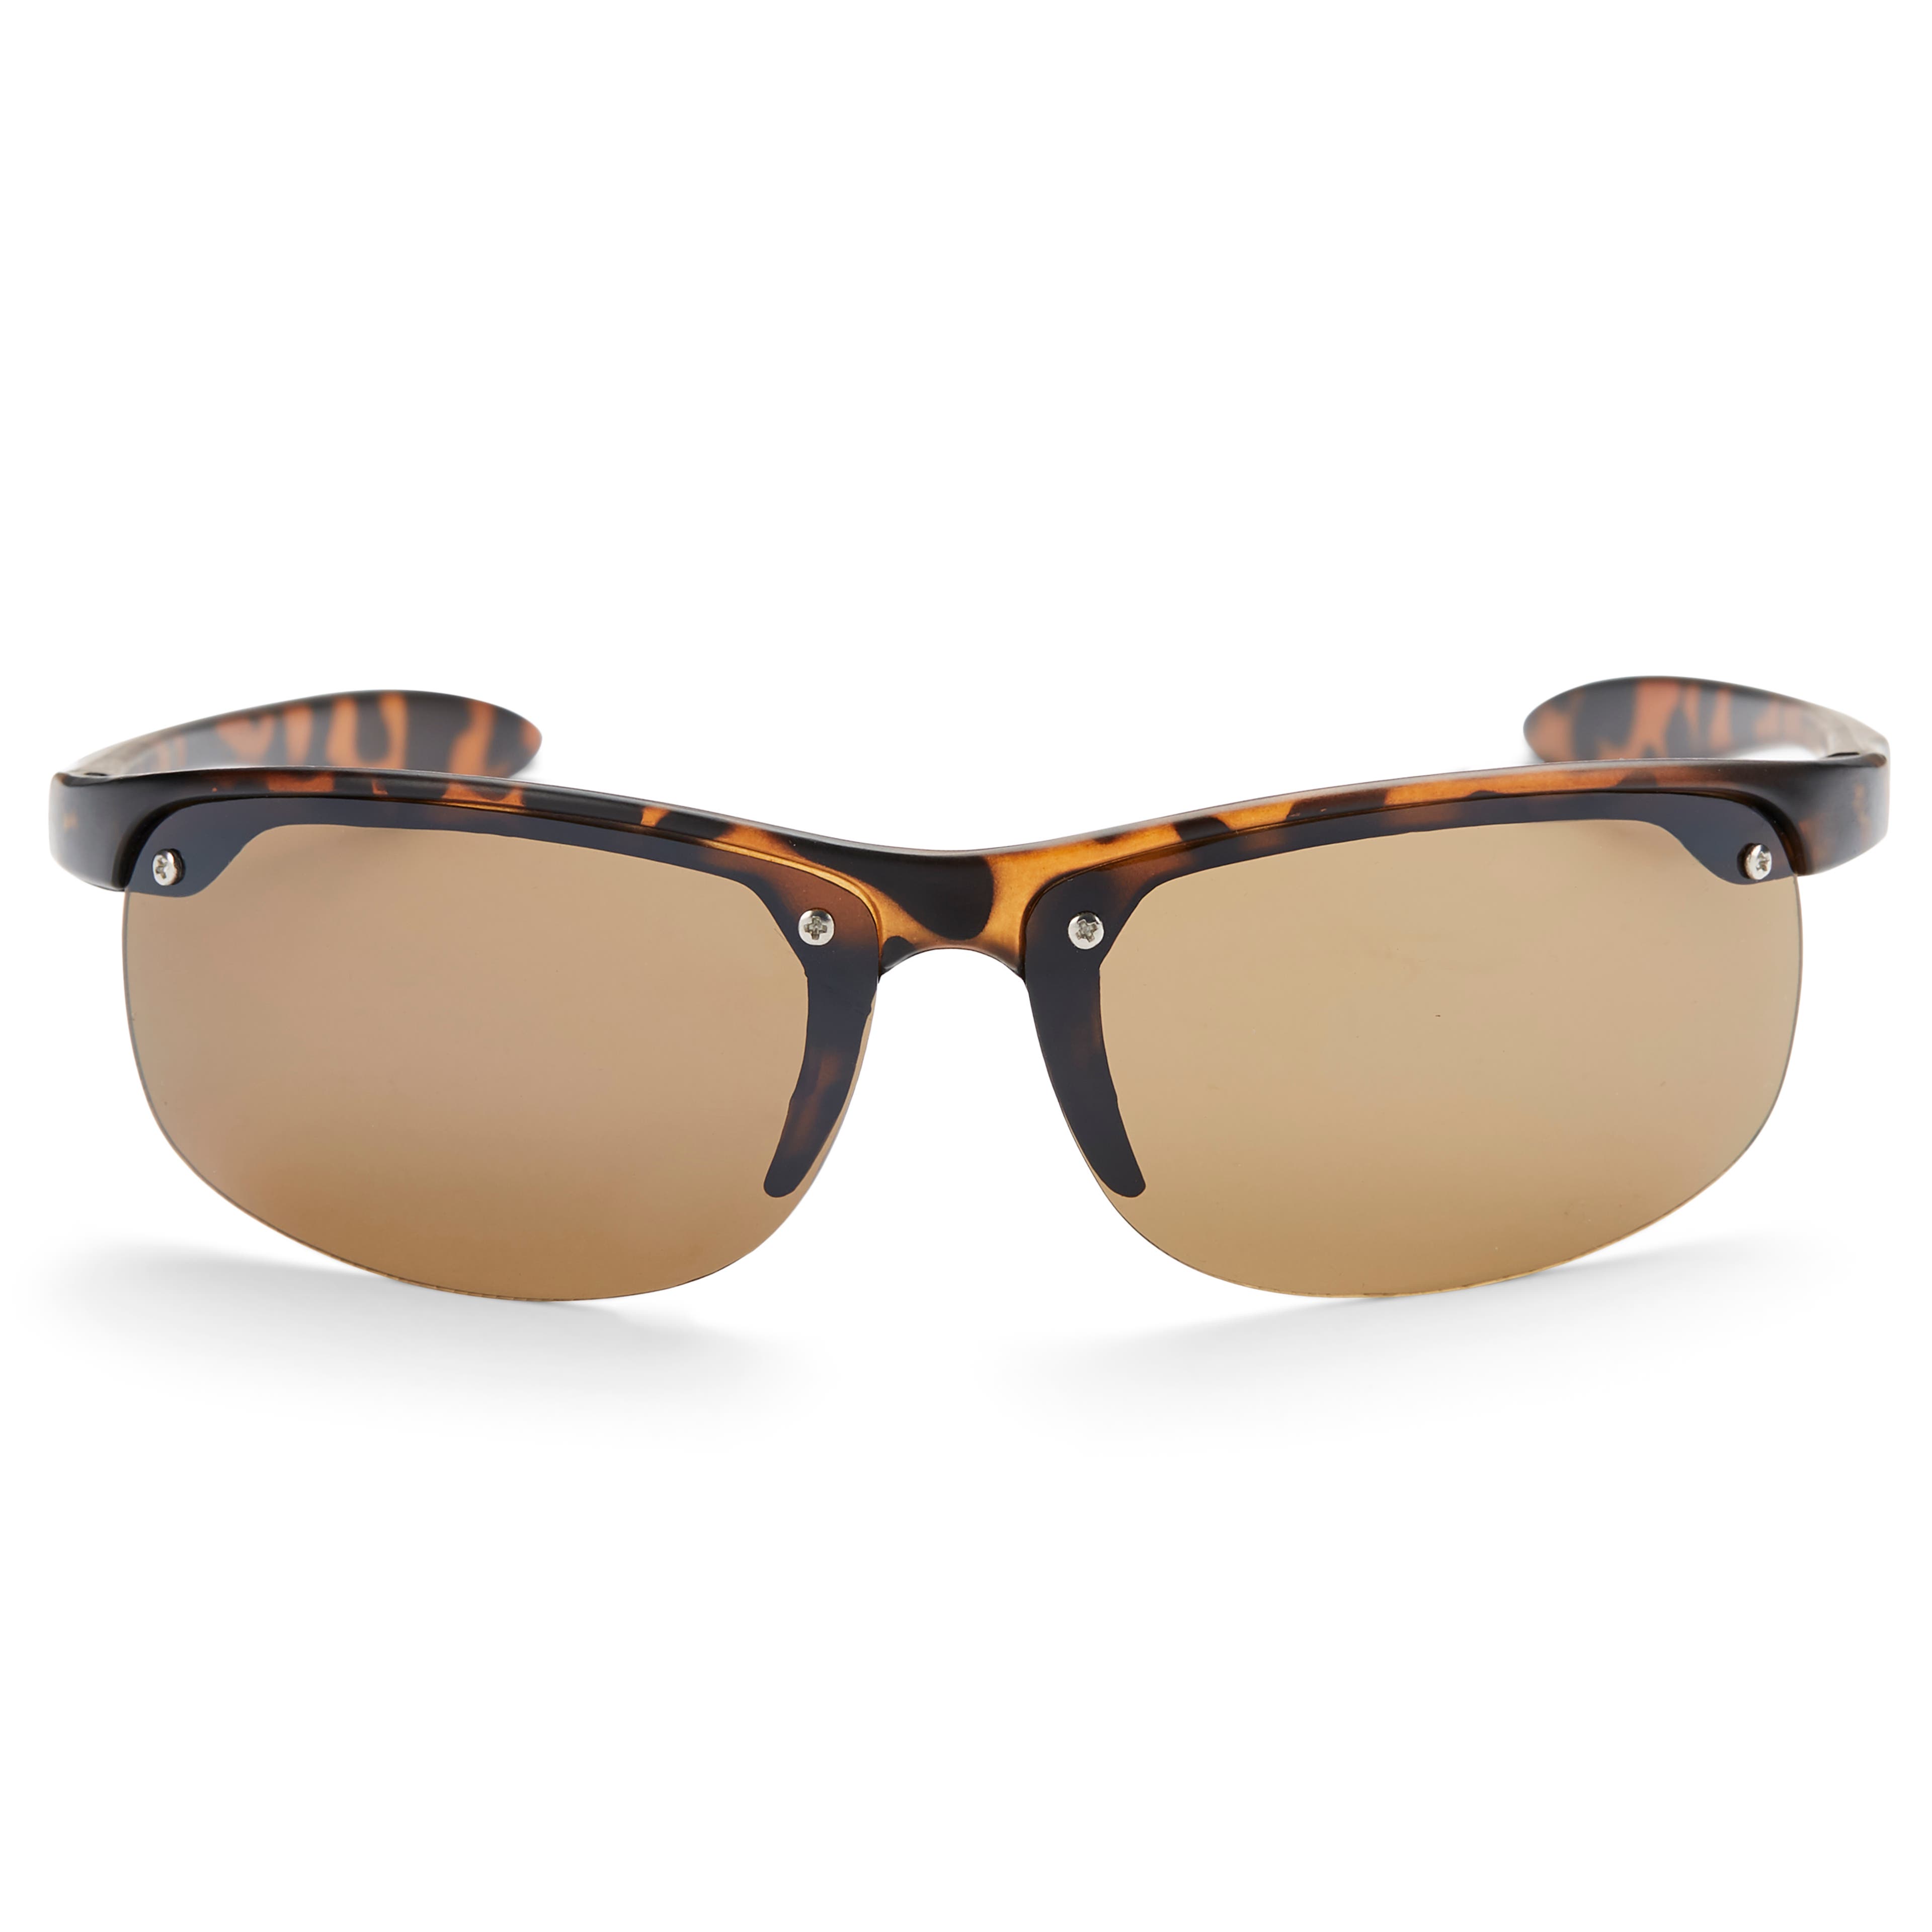 Tortoise Shell & Brown Wraparound Sports Sunglasses, In stock!